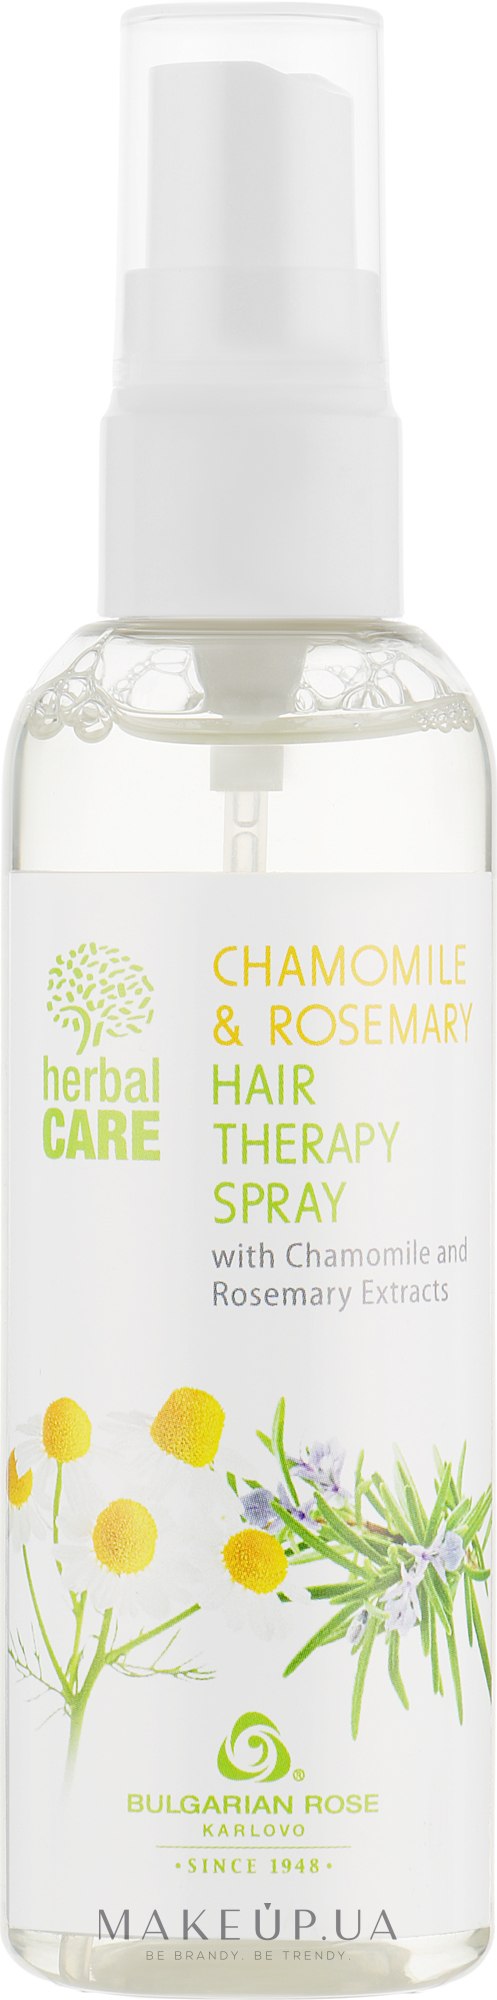 Терапевтический спрей для волос с ромашкой и розмарином - Bulgarian Rose Aromatherapy Herbal Care Chamomile & Rosemary Hair Therapy Spray — фото 100ml